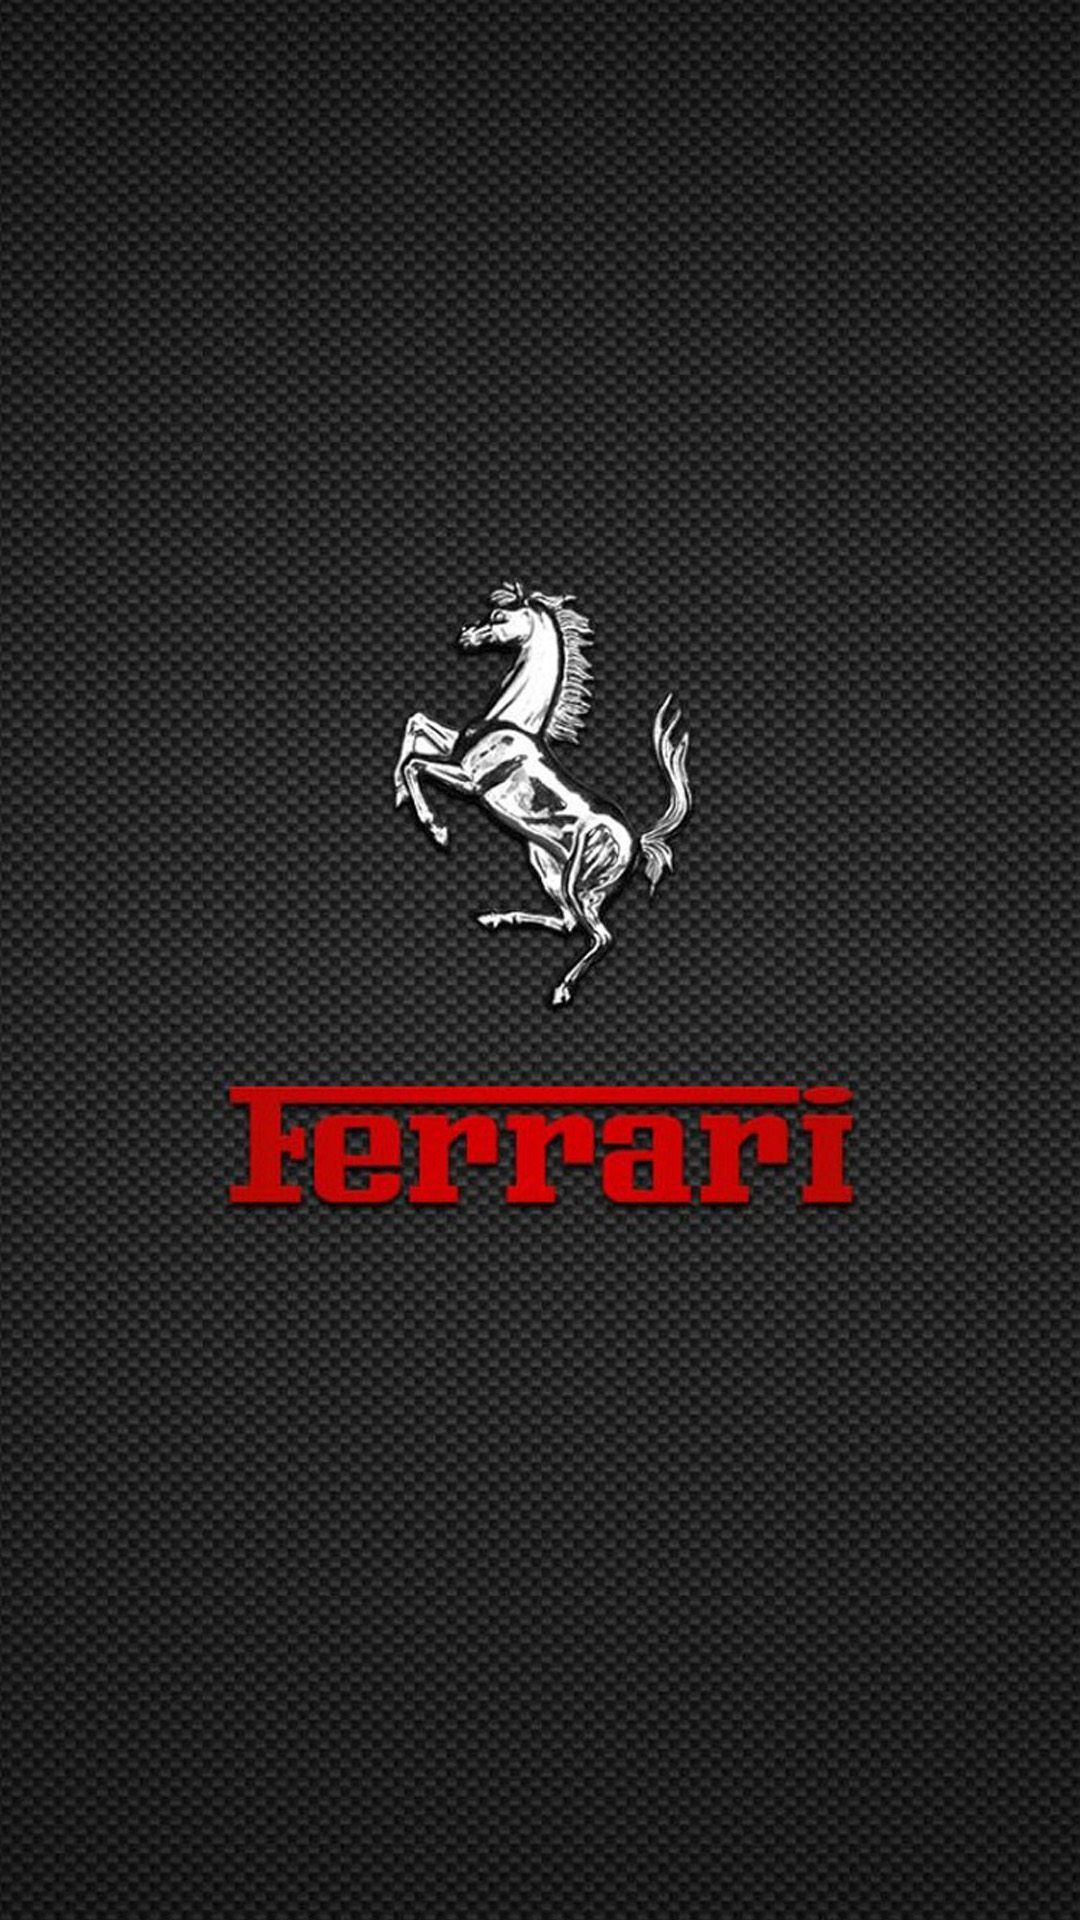 Ferrari Spyker Mf1 Wallpapers